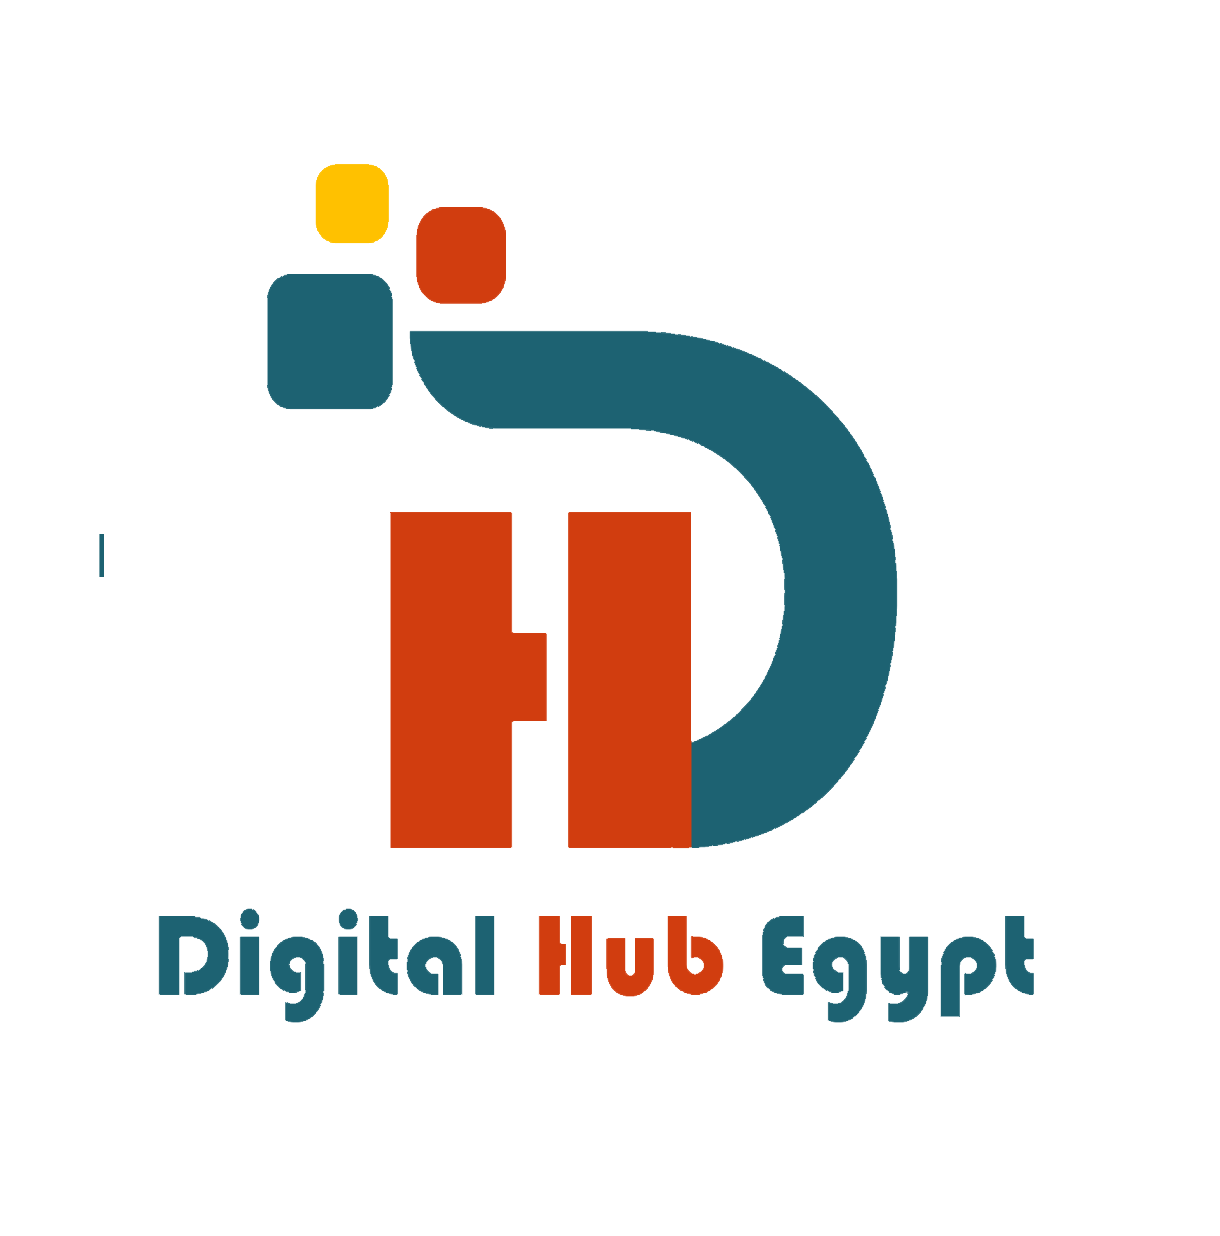 Digital Hub group